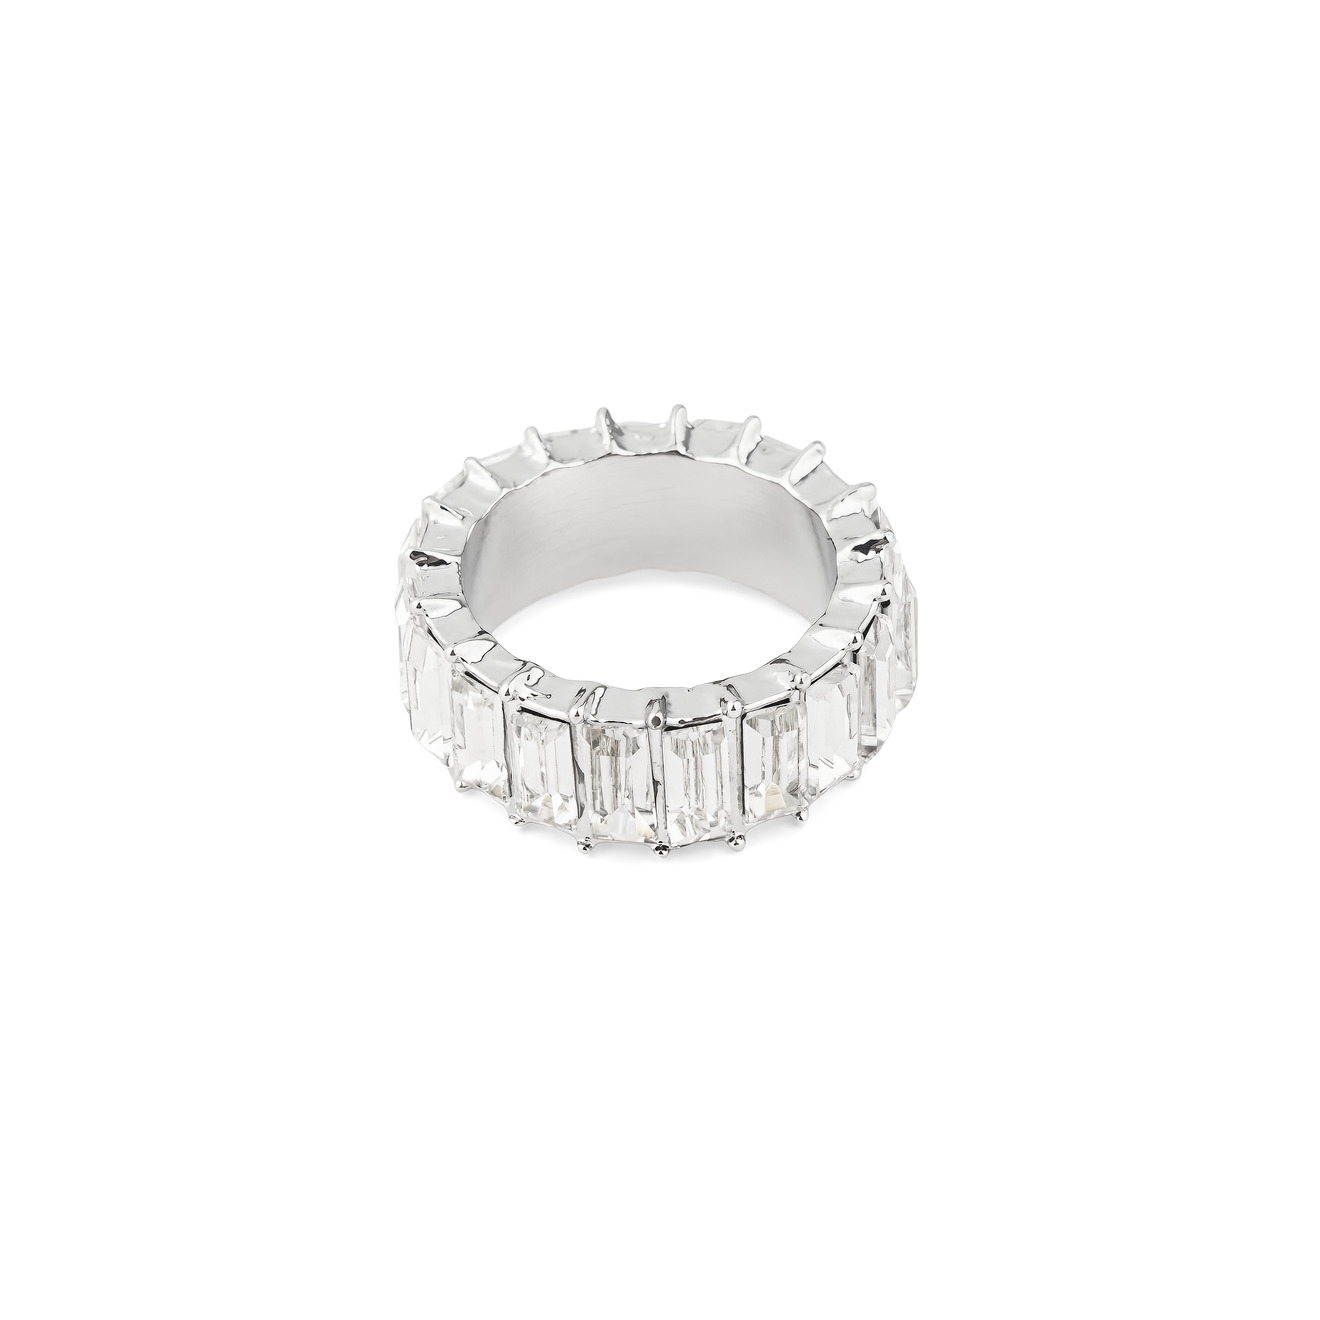 Herald Percy Серебристое кольцо с белыми кристаллами herald percy серебристое колье с прозрачными и белыми камнями